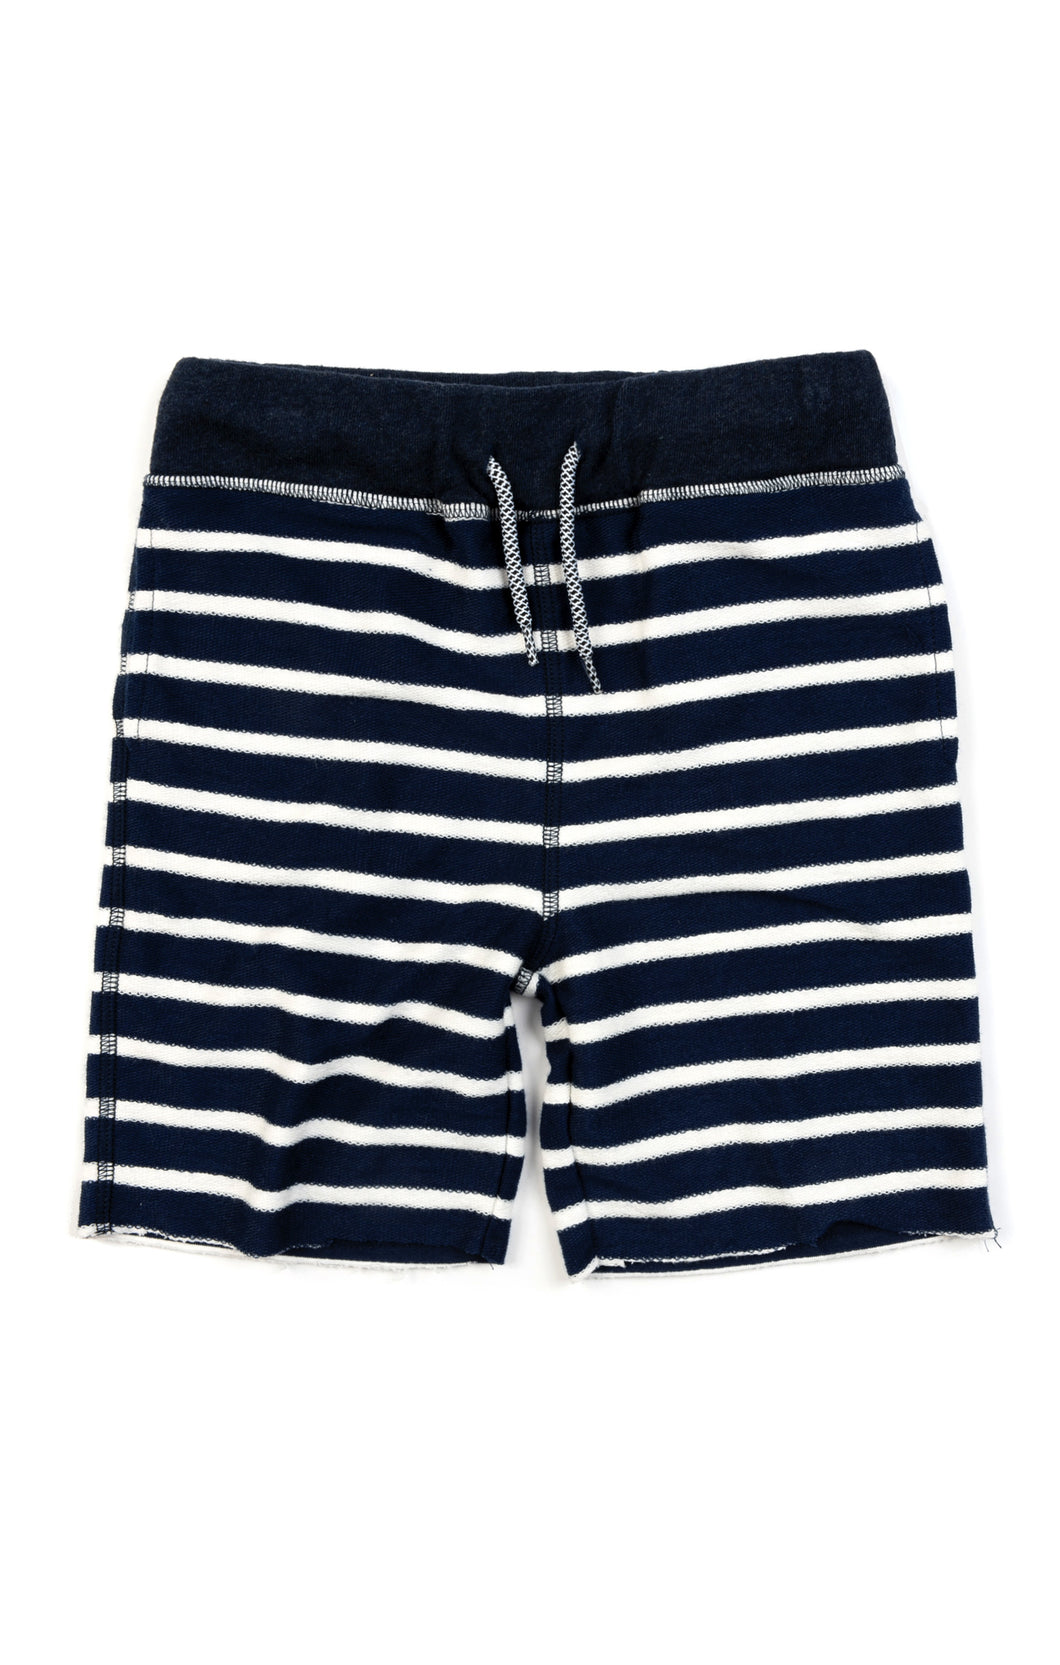 Camp Shorts - Navy Stripe